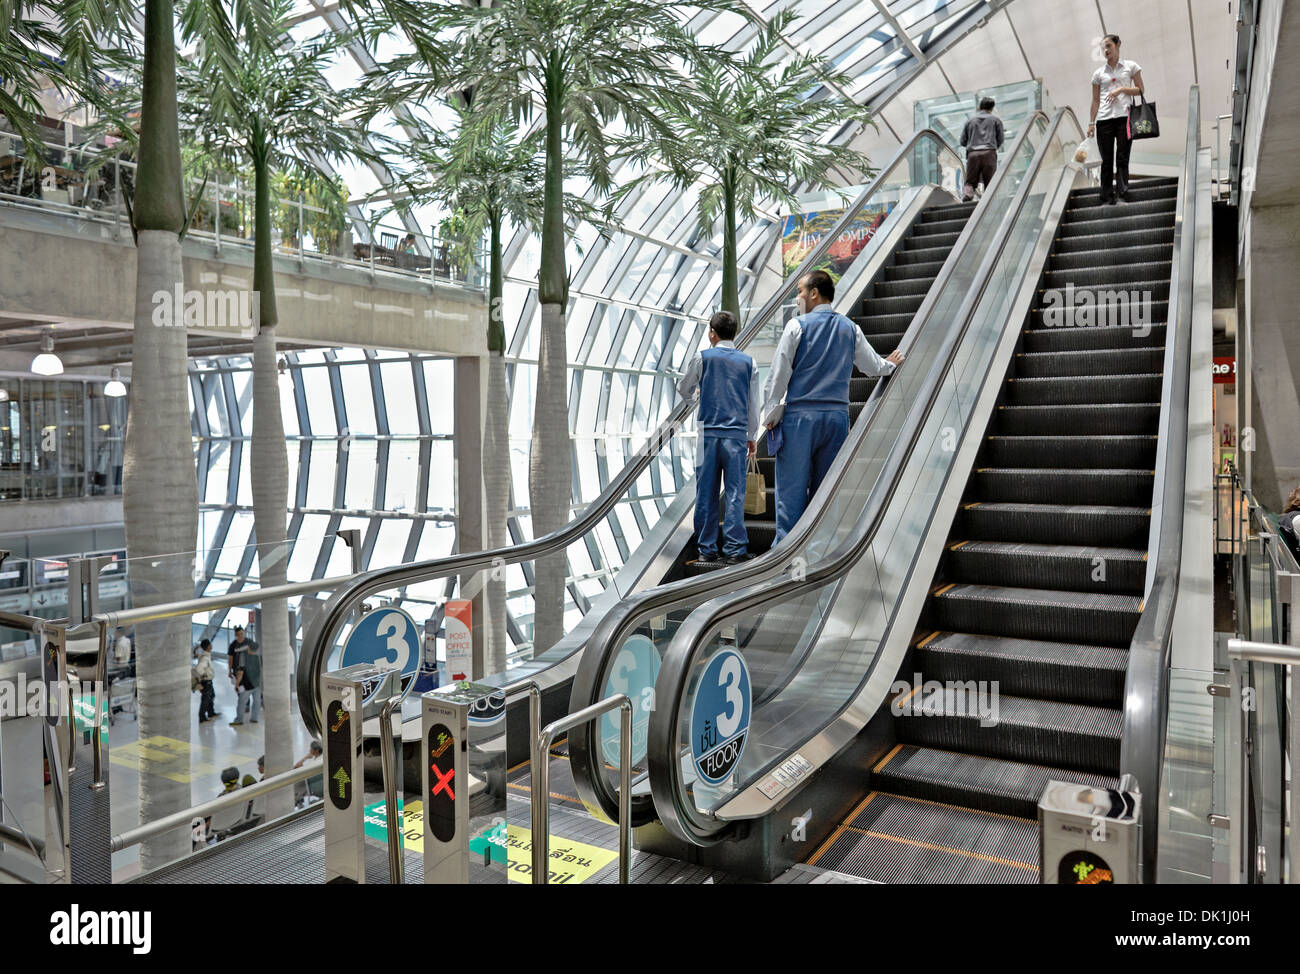 Interior view of escalator at Suvarnabhumi airport Bangkok Thailand S. E. Asia Stock Photo